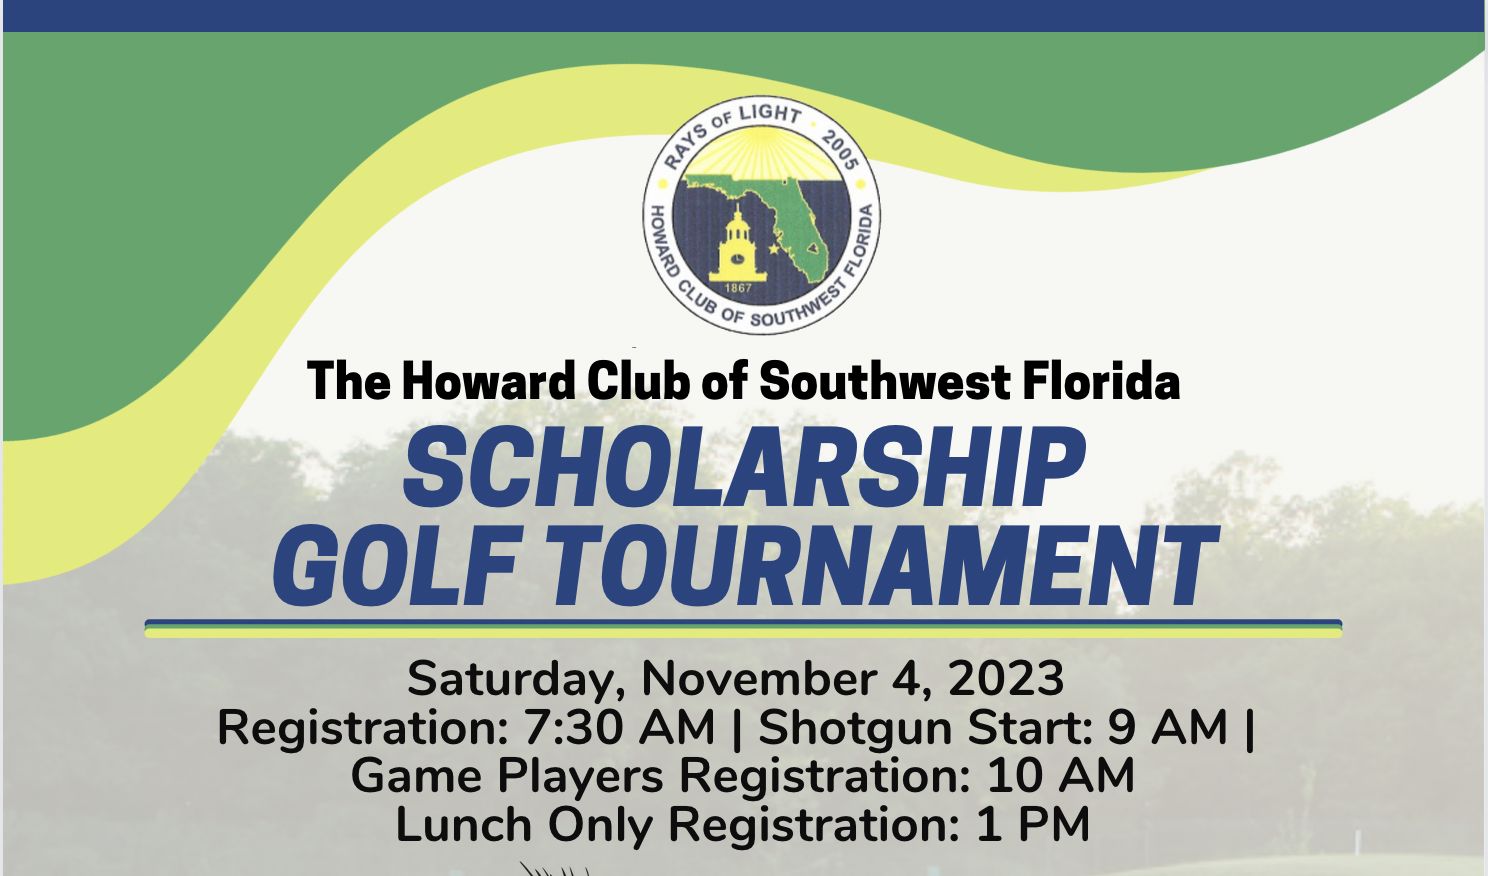 2023 The Howard Club of Southwest Florida Scholarship Golf Tournament